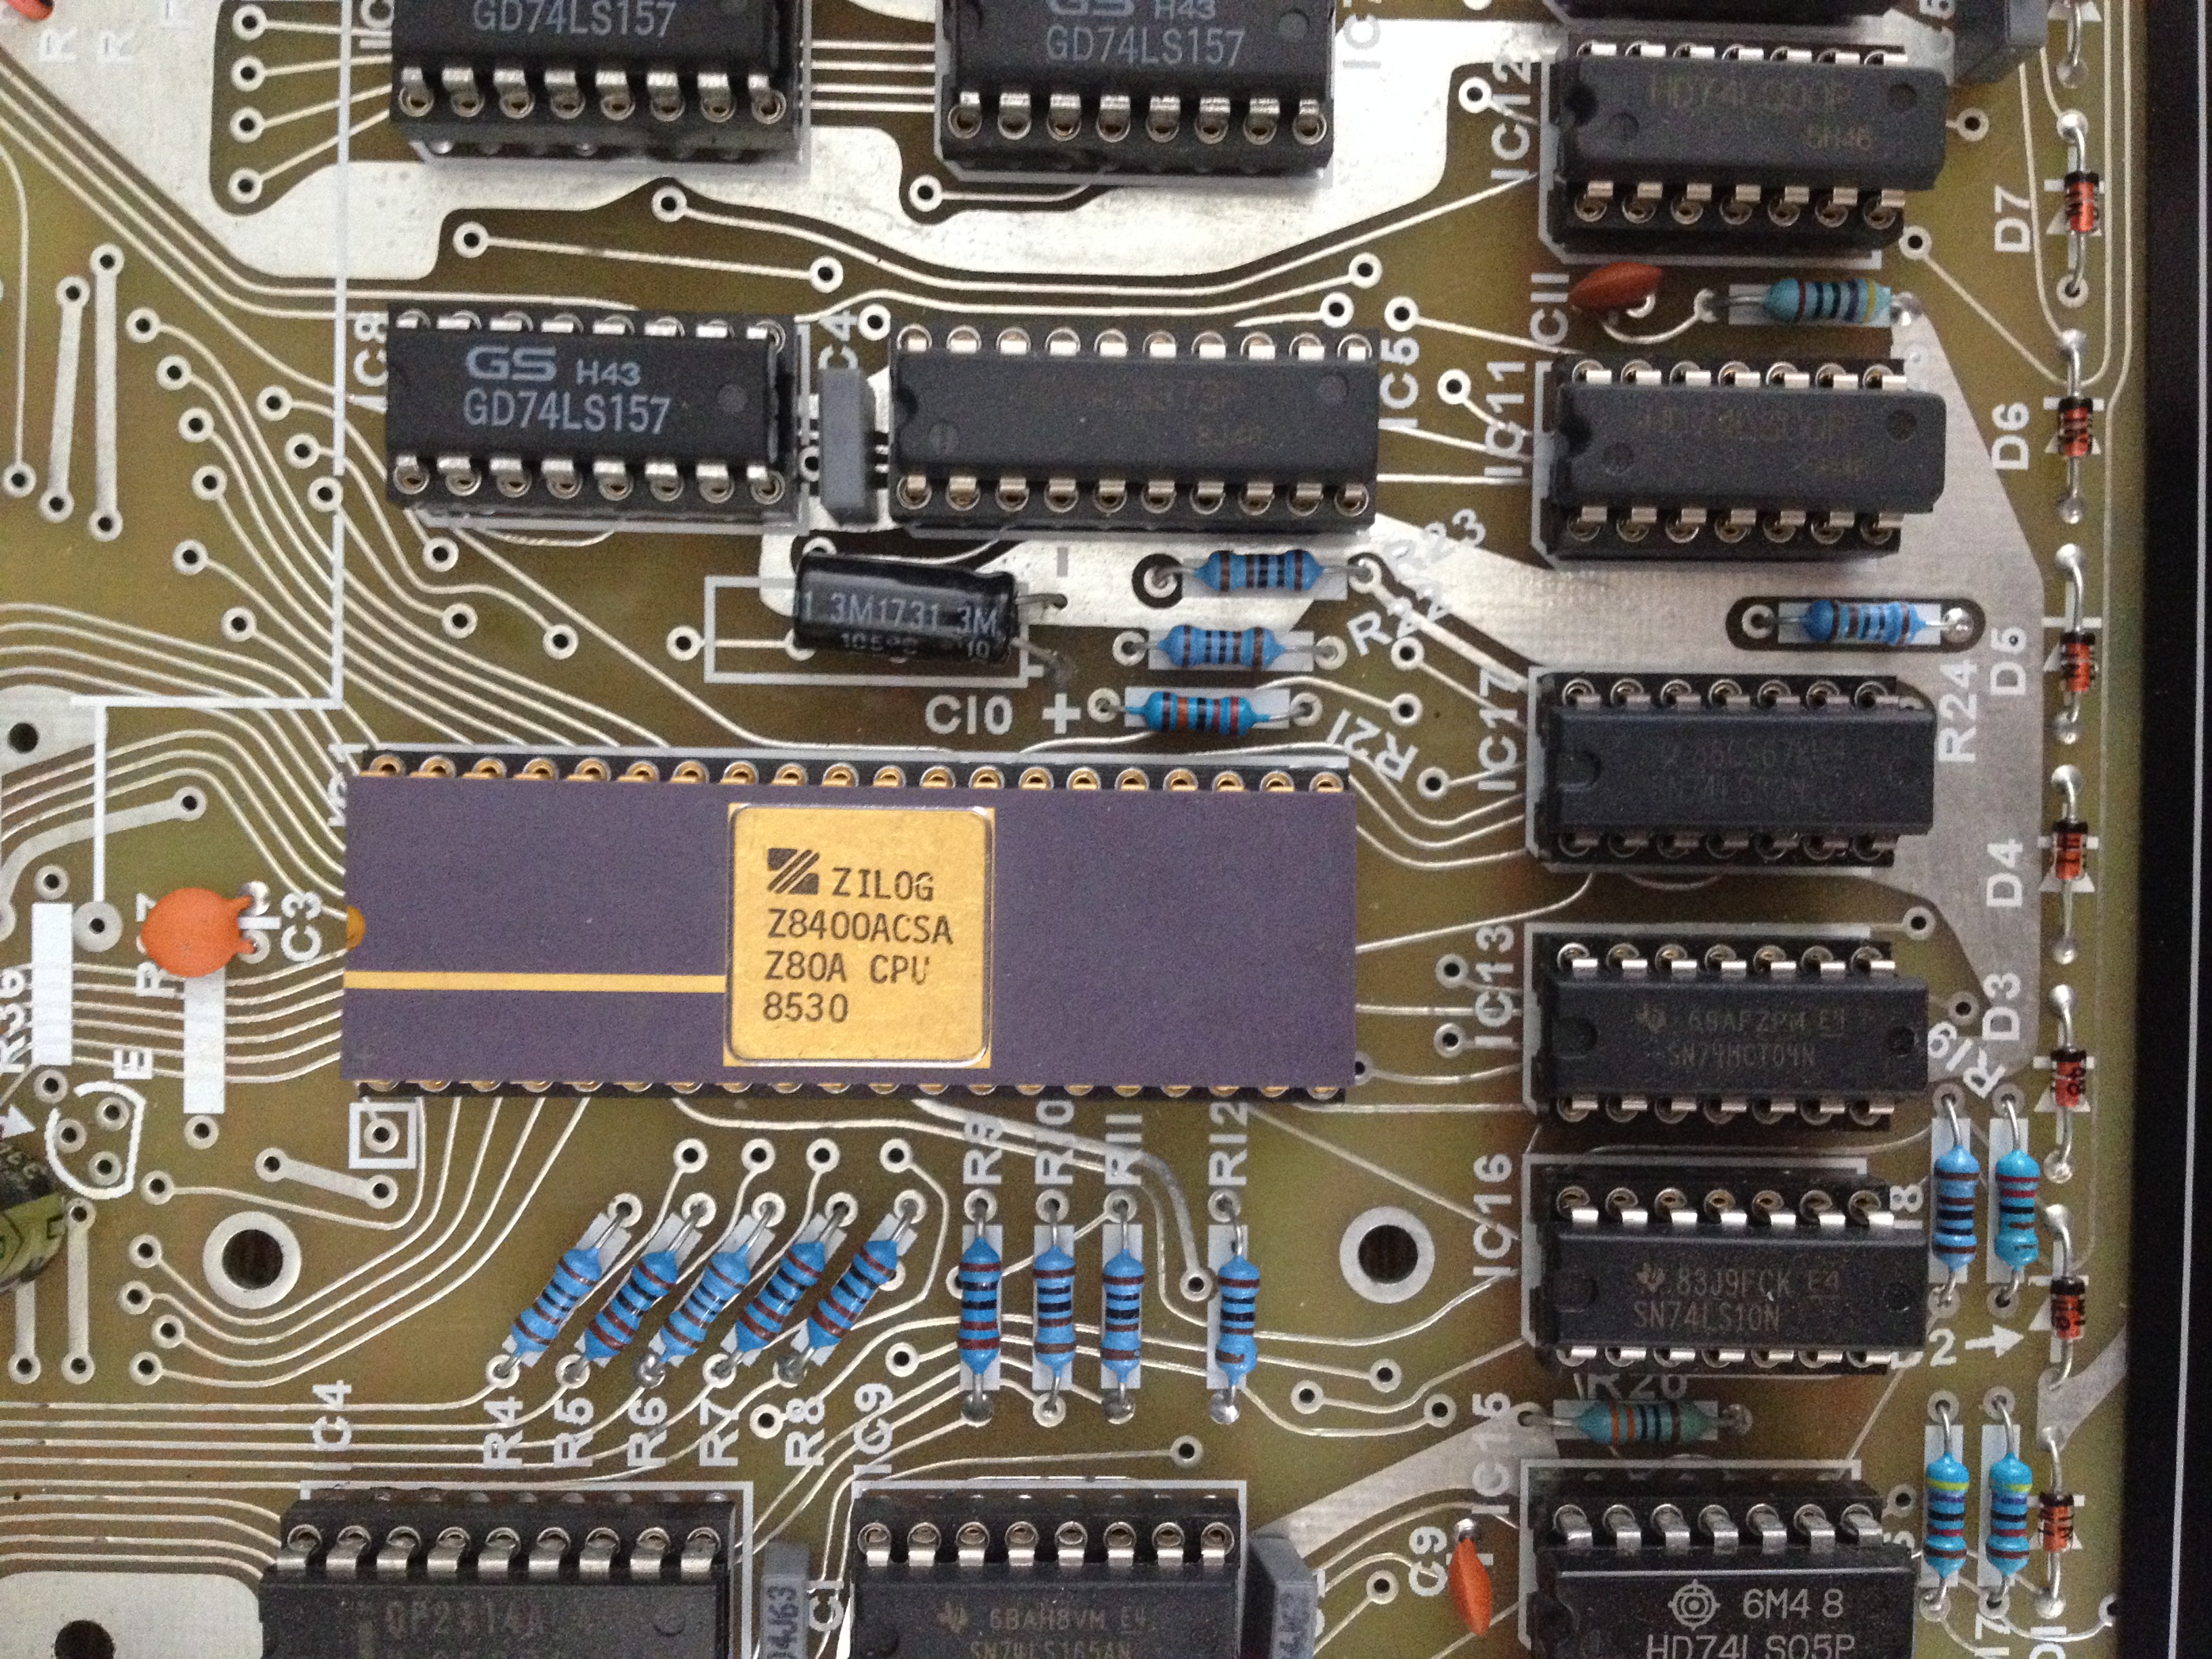 Sinclair ZX80 / ZX81 / Z88 Forums - Search